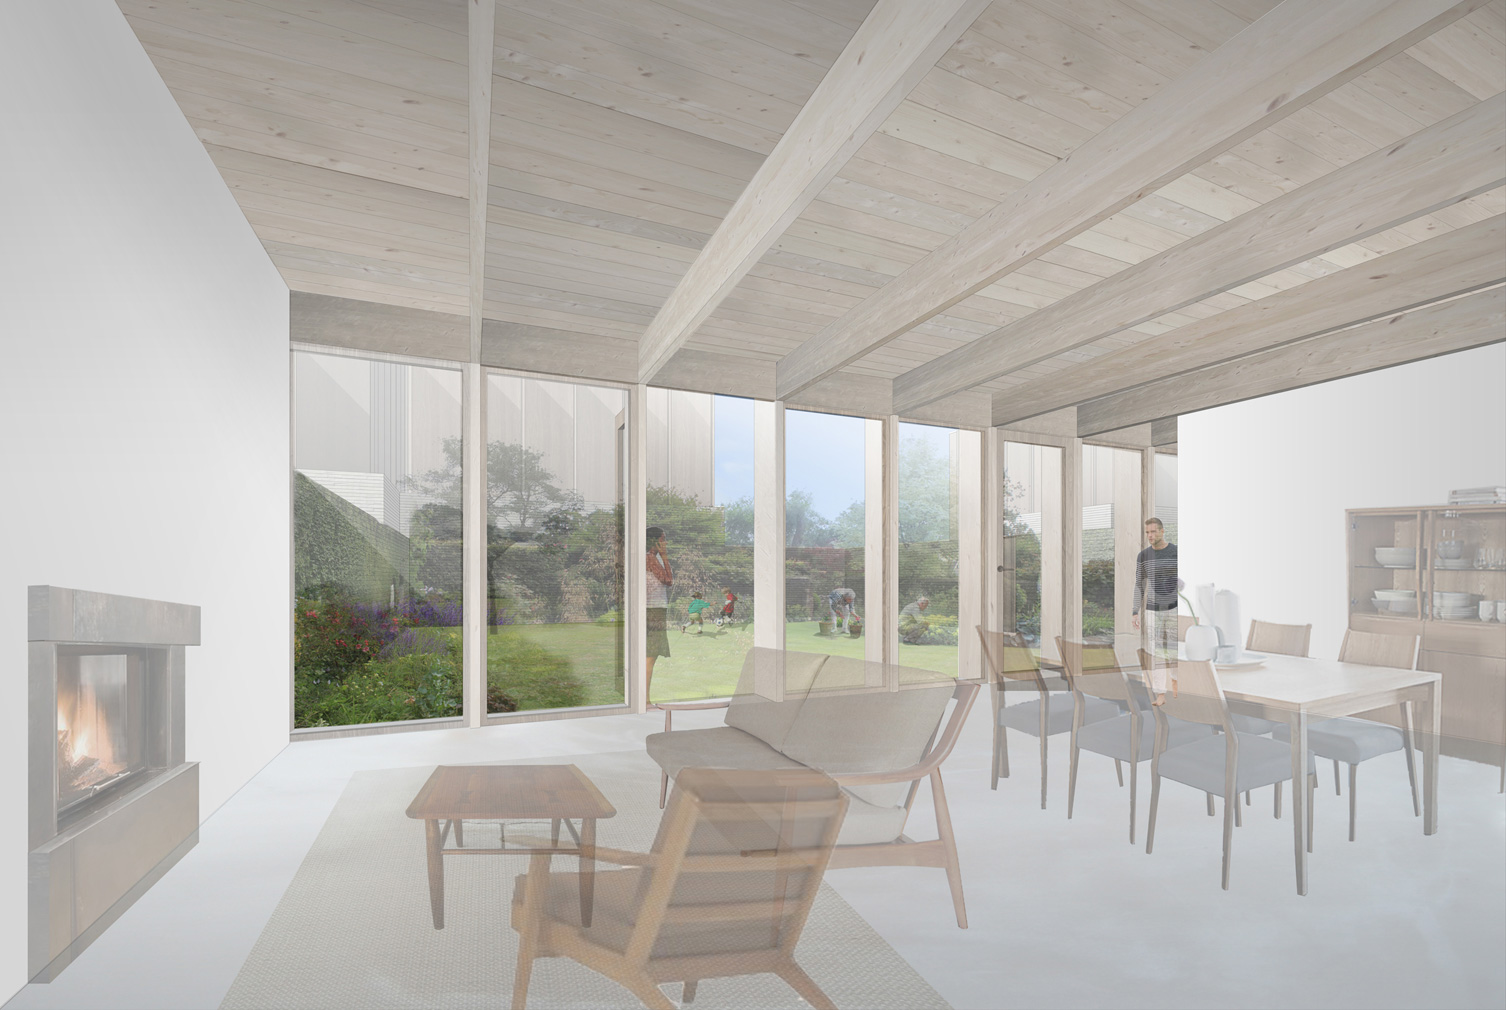 Jamie Fobert Architects's custom-build, affordable cottage's interior. Courtesy of JFA / RIBA